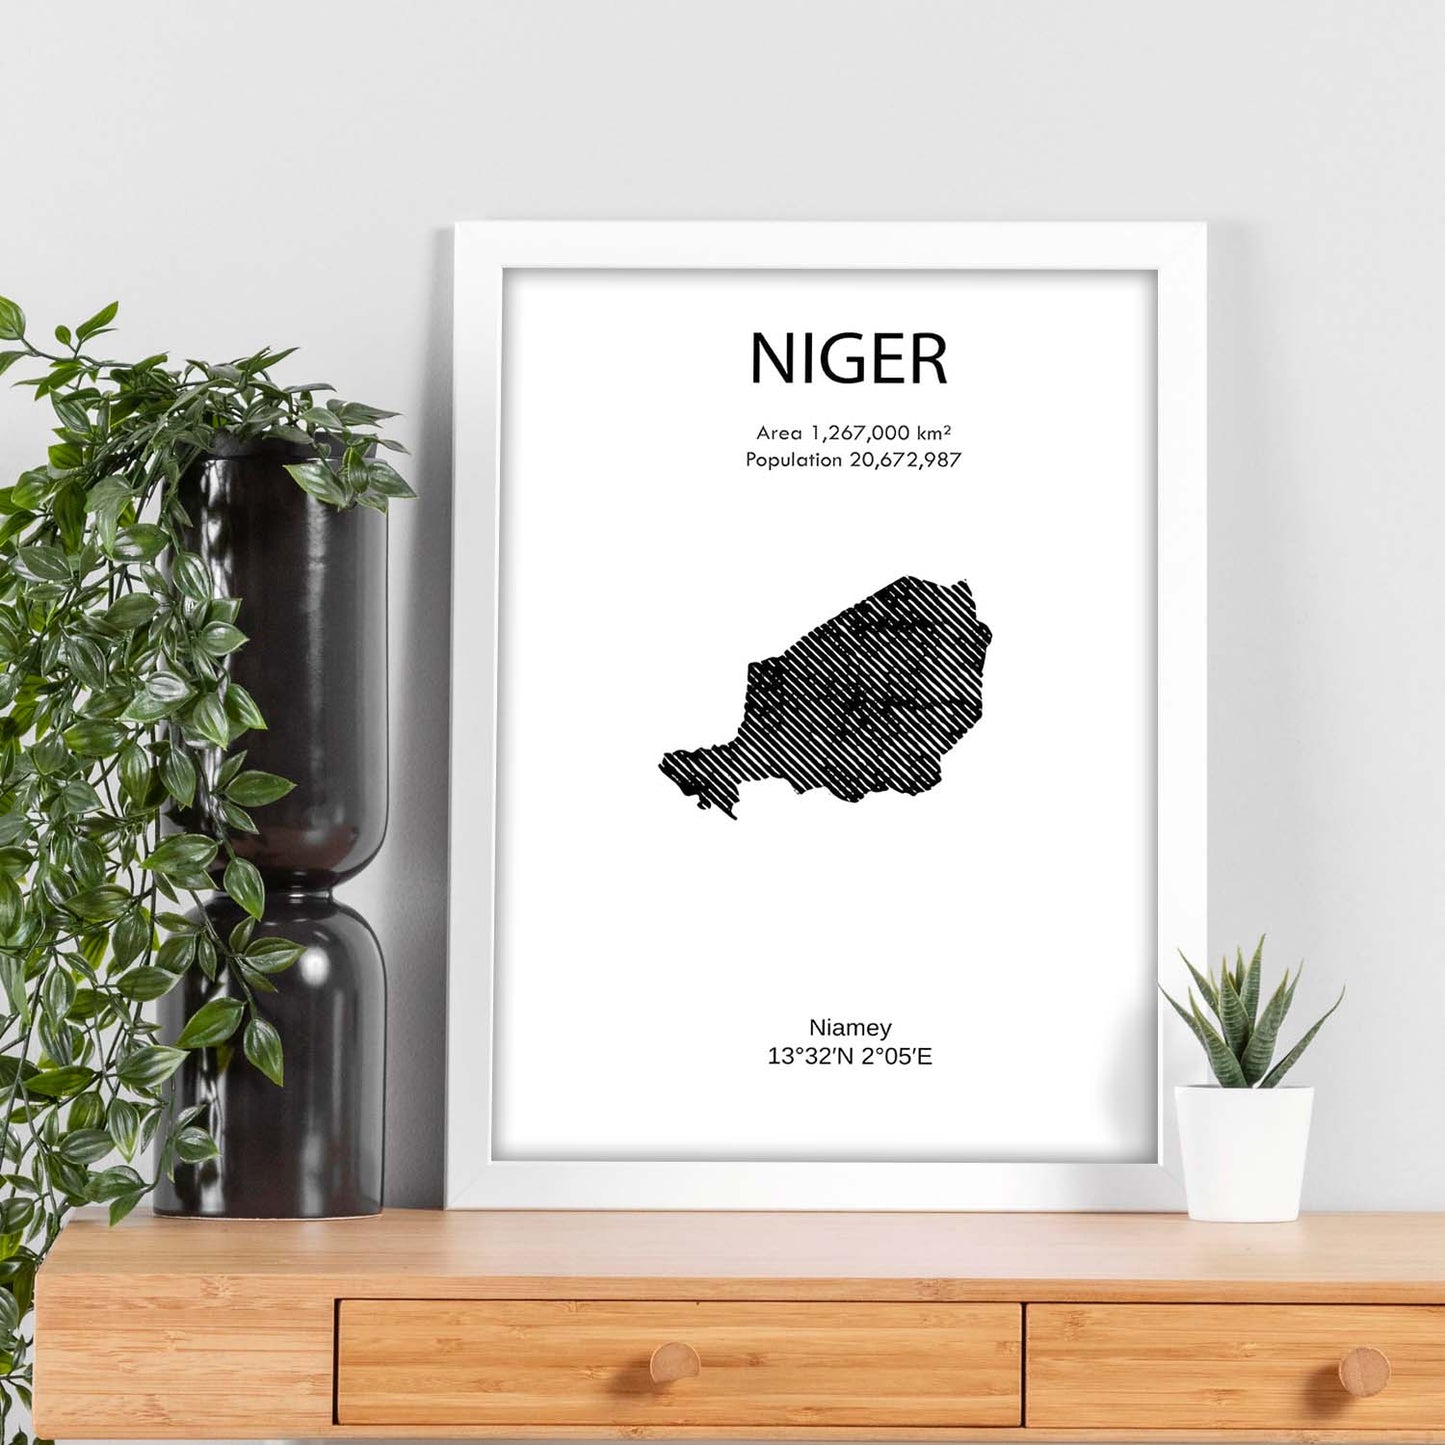 Poster de Niger. Láminas de paises y continentes del mundo.-Artwork-Nacnic-Nacnic Estudio SL